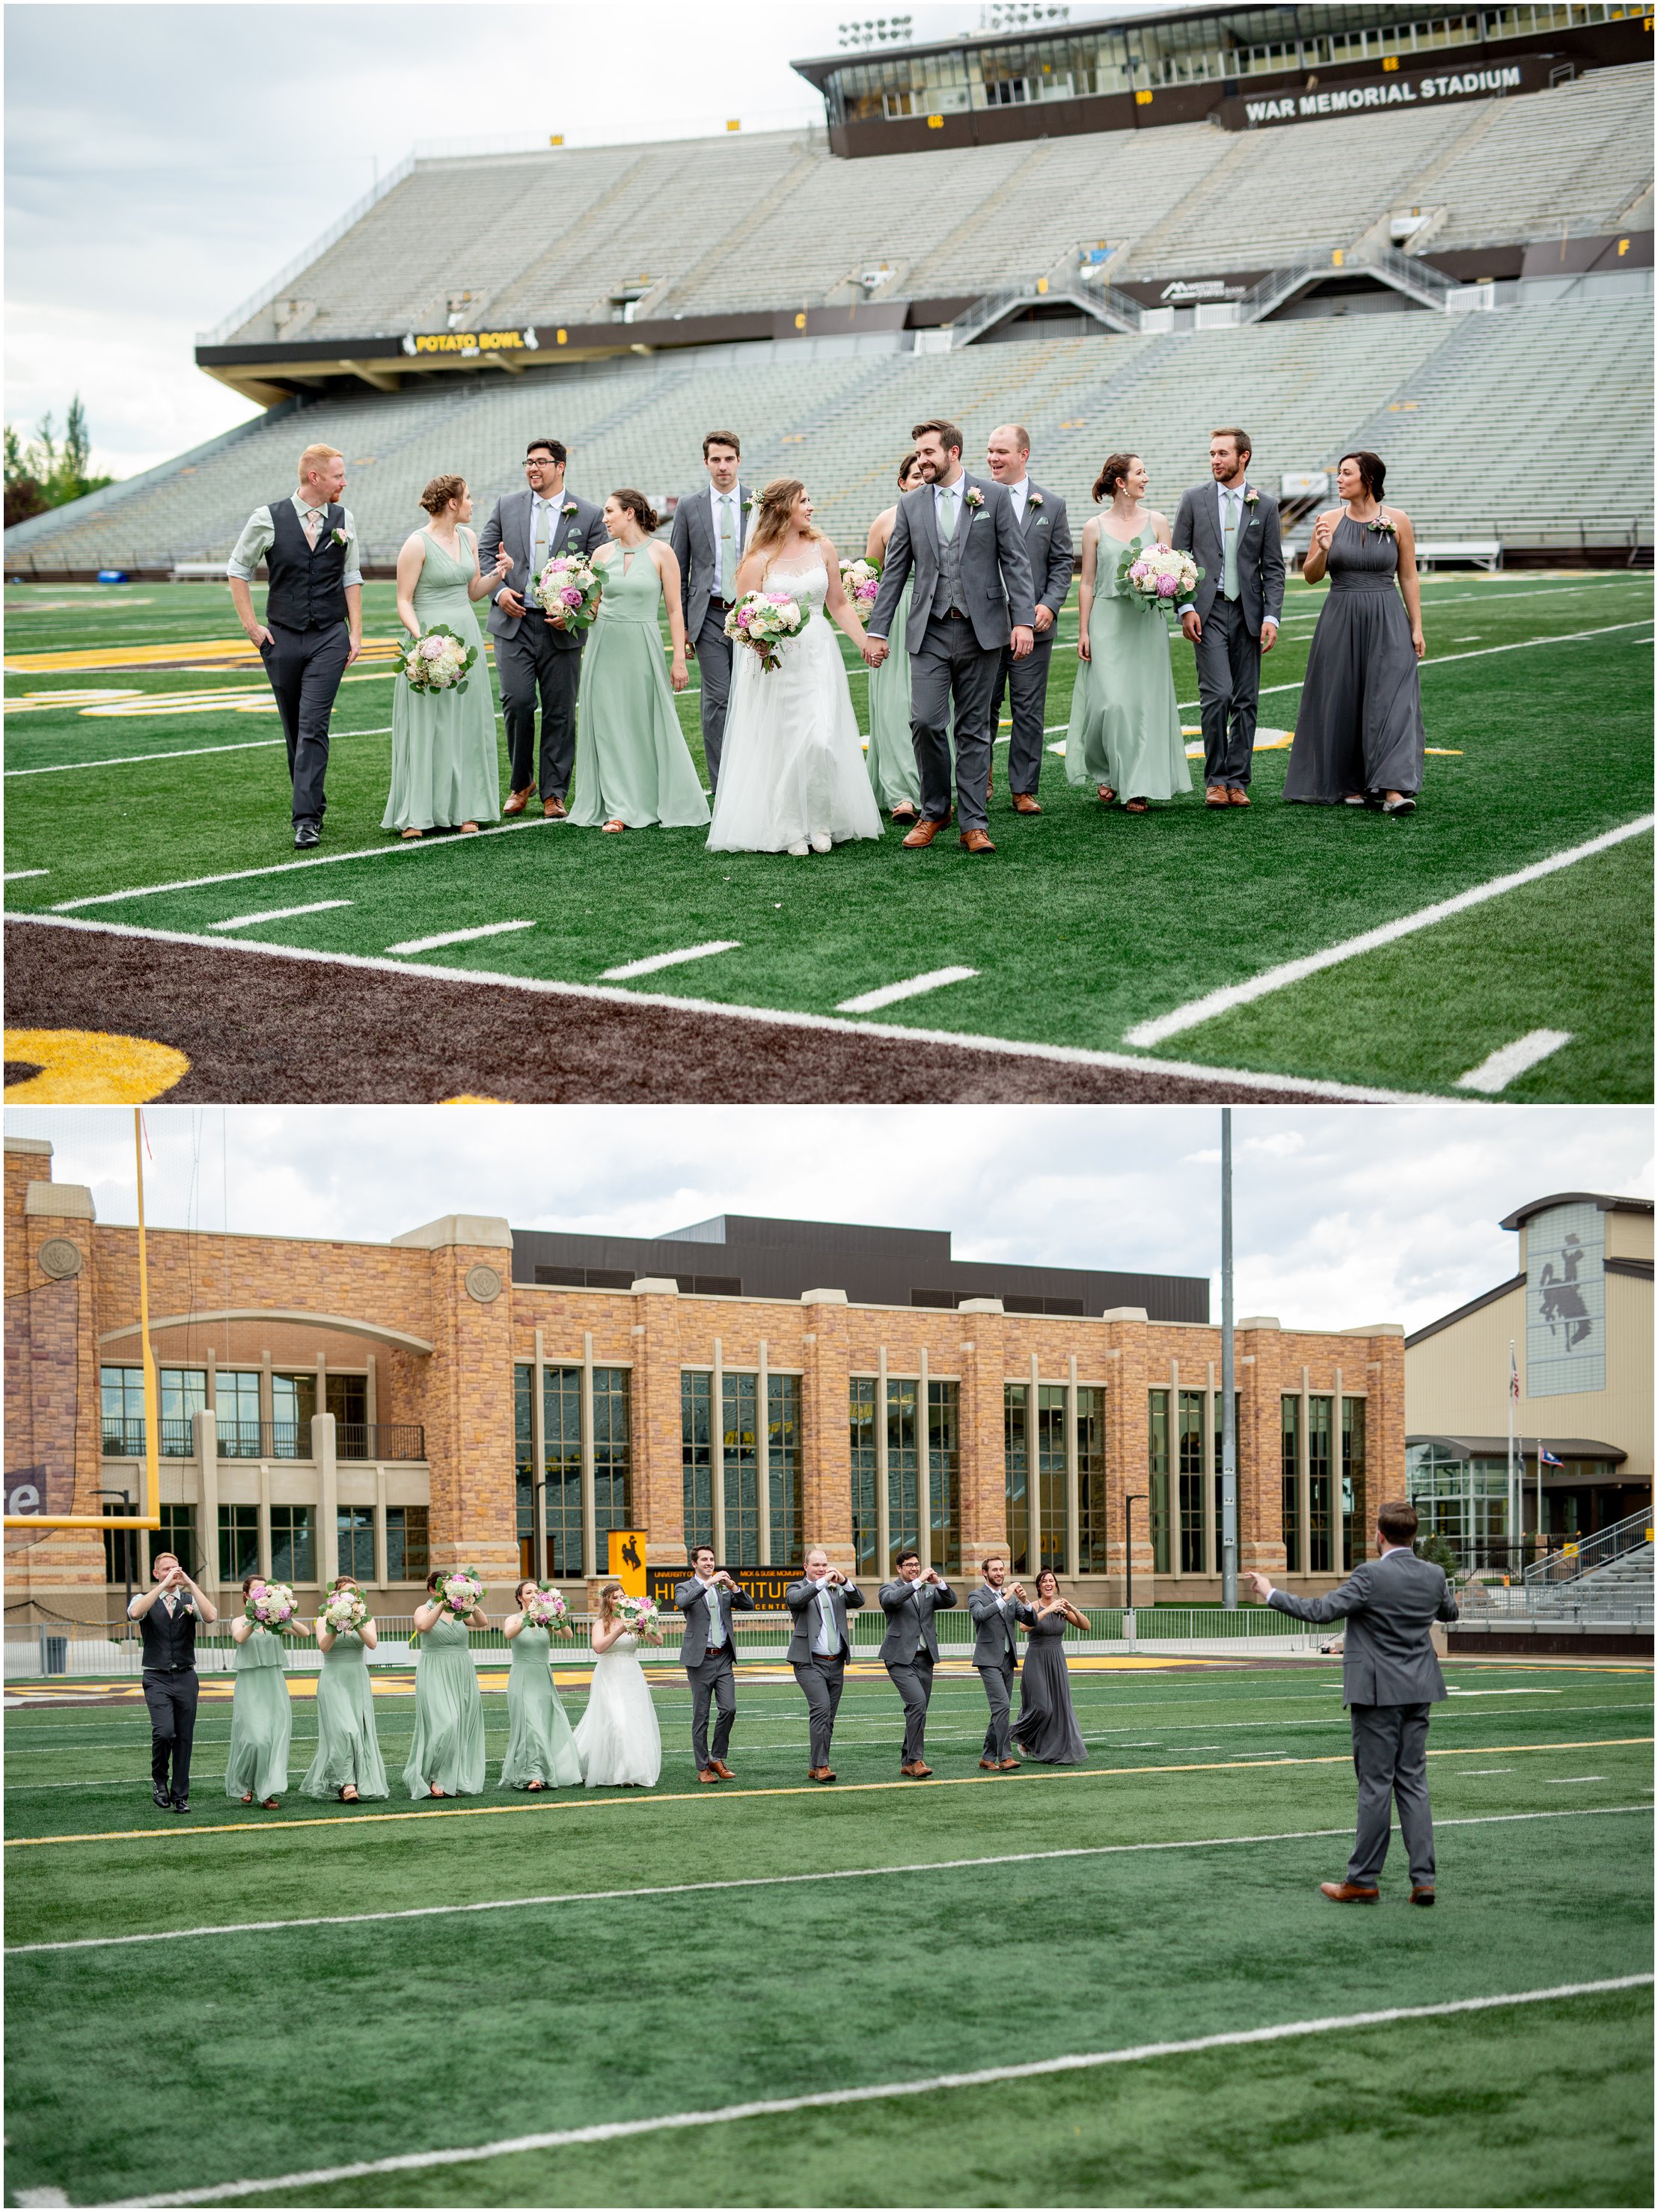 Laramie Newman Center adn War Memorial Stadium Wedding